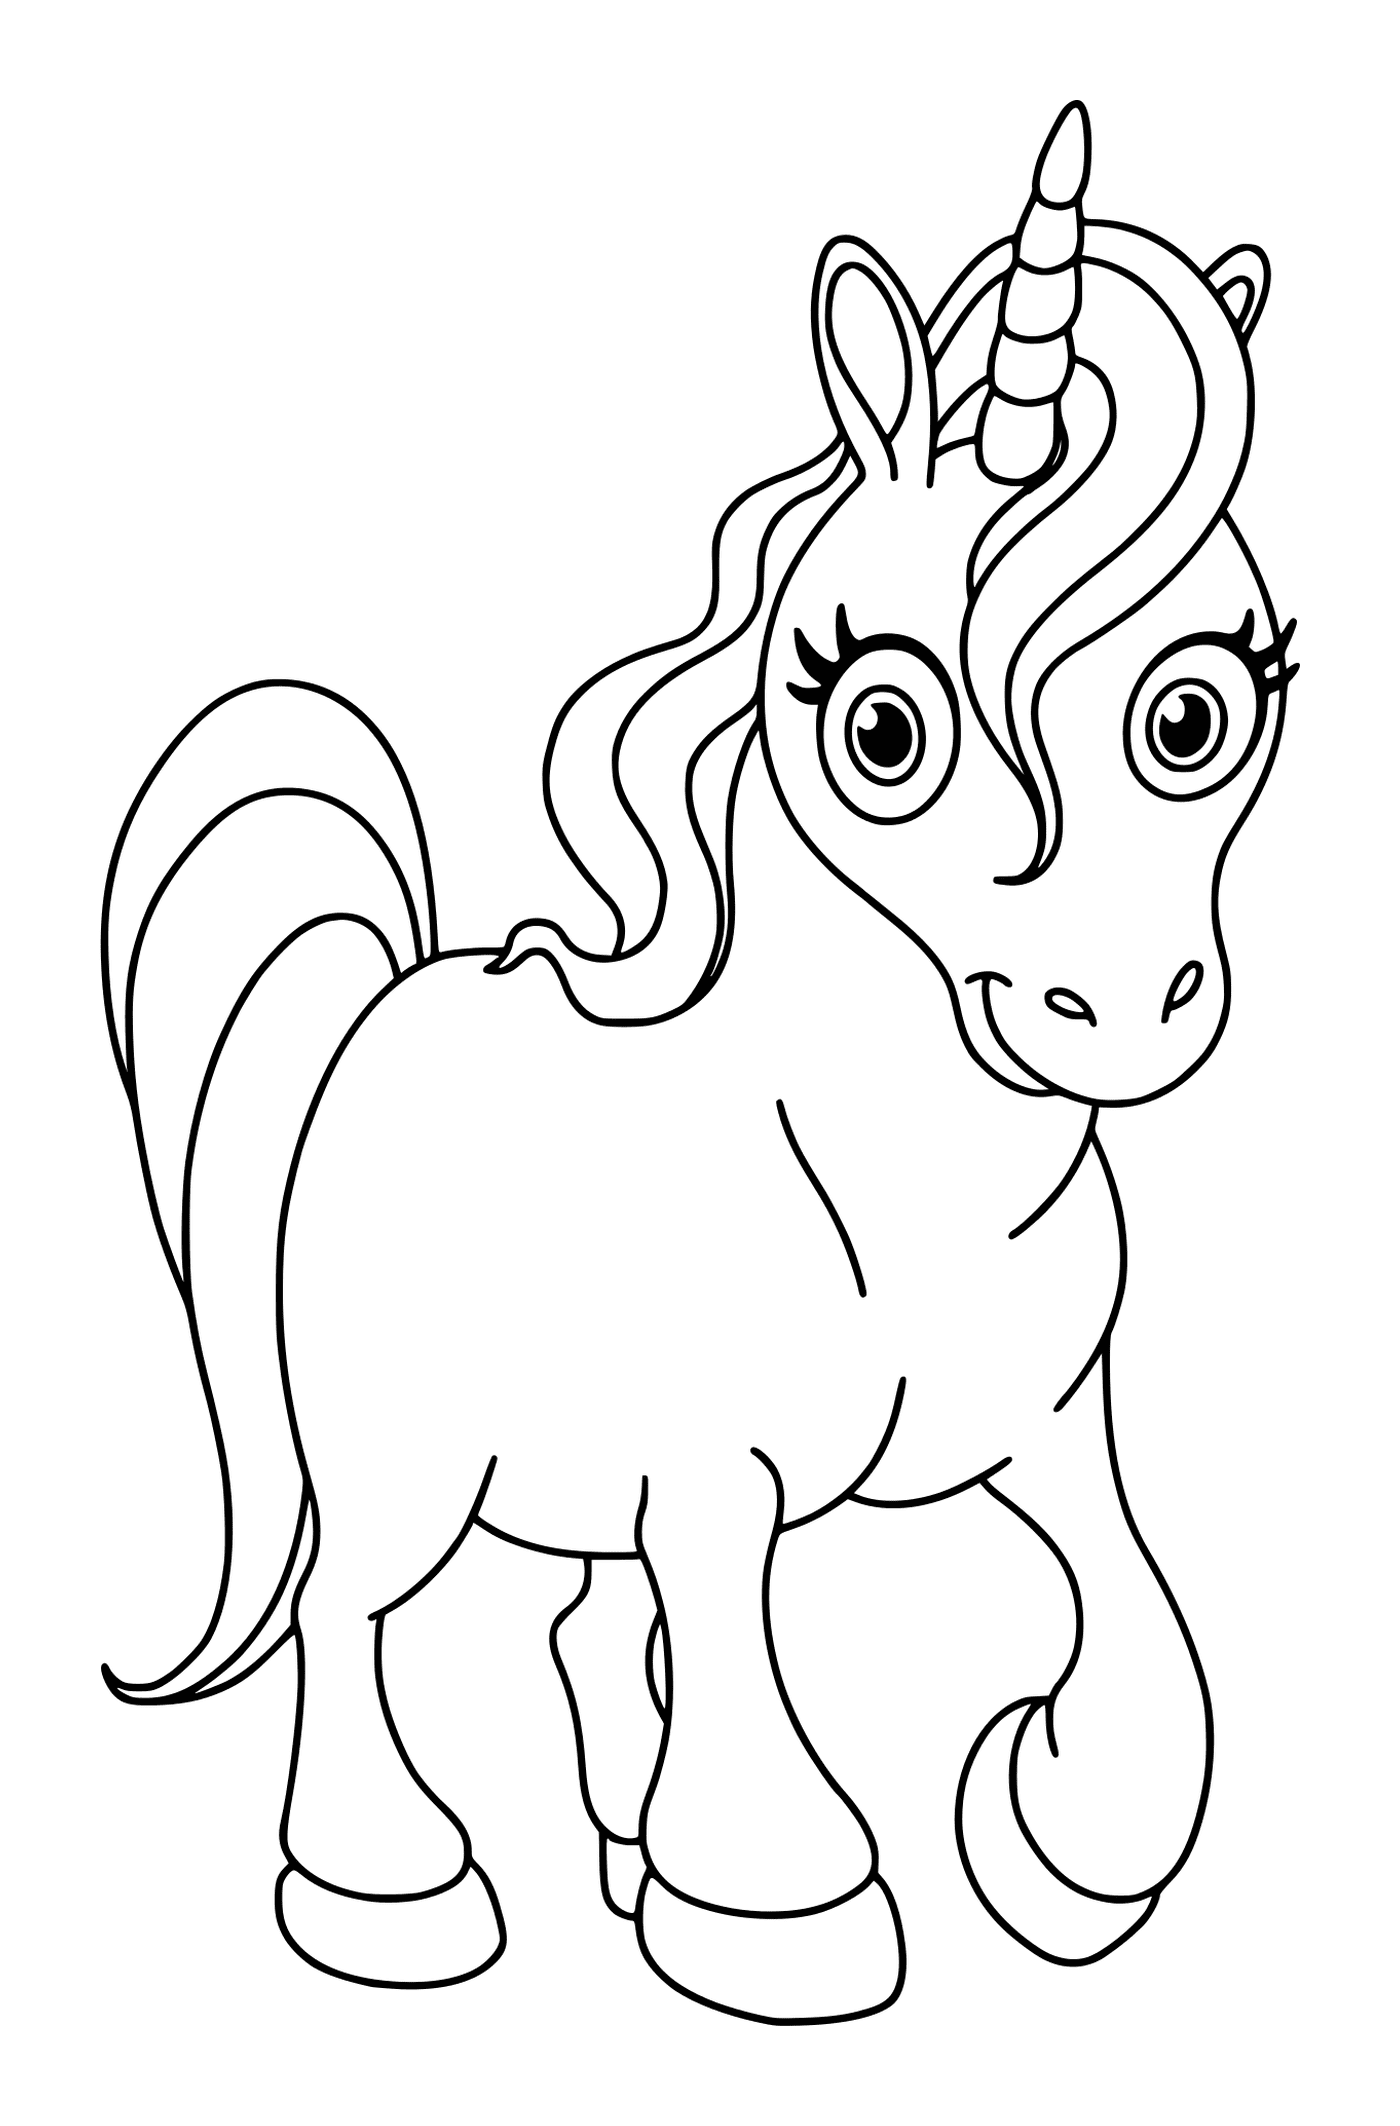  Principessa unicorno kawaii adorabile 